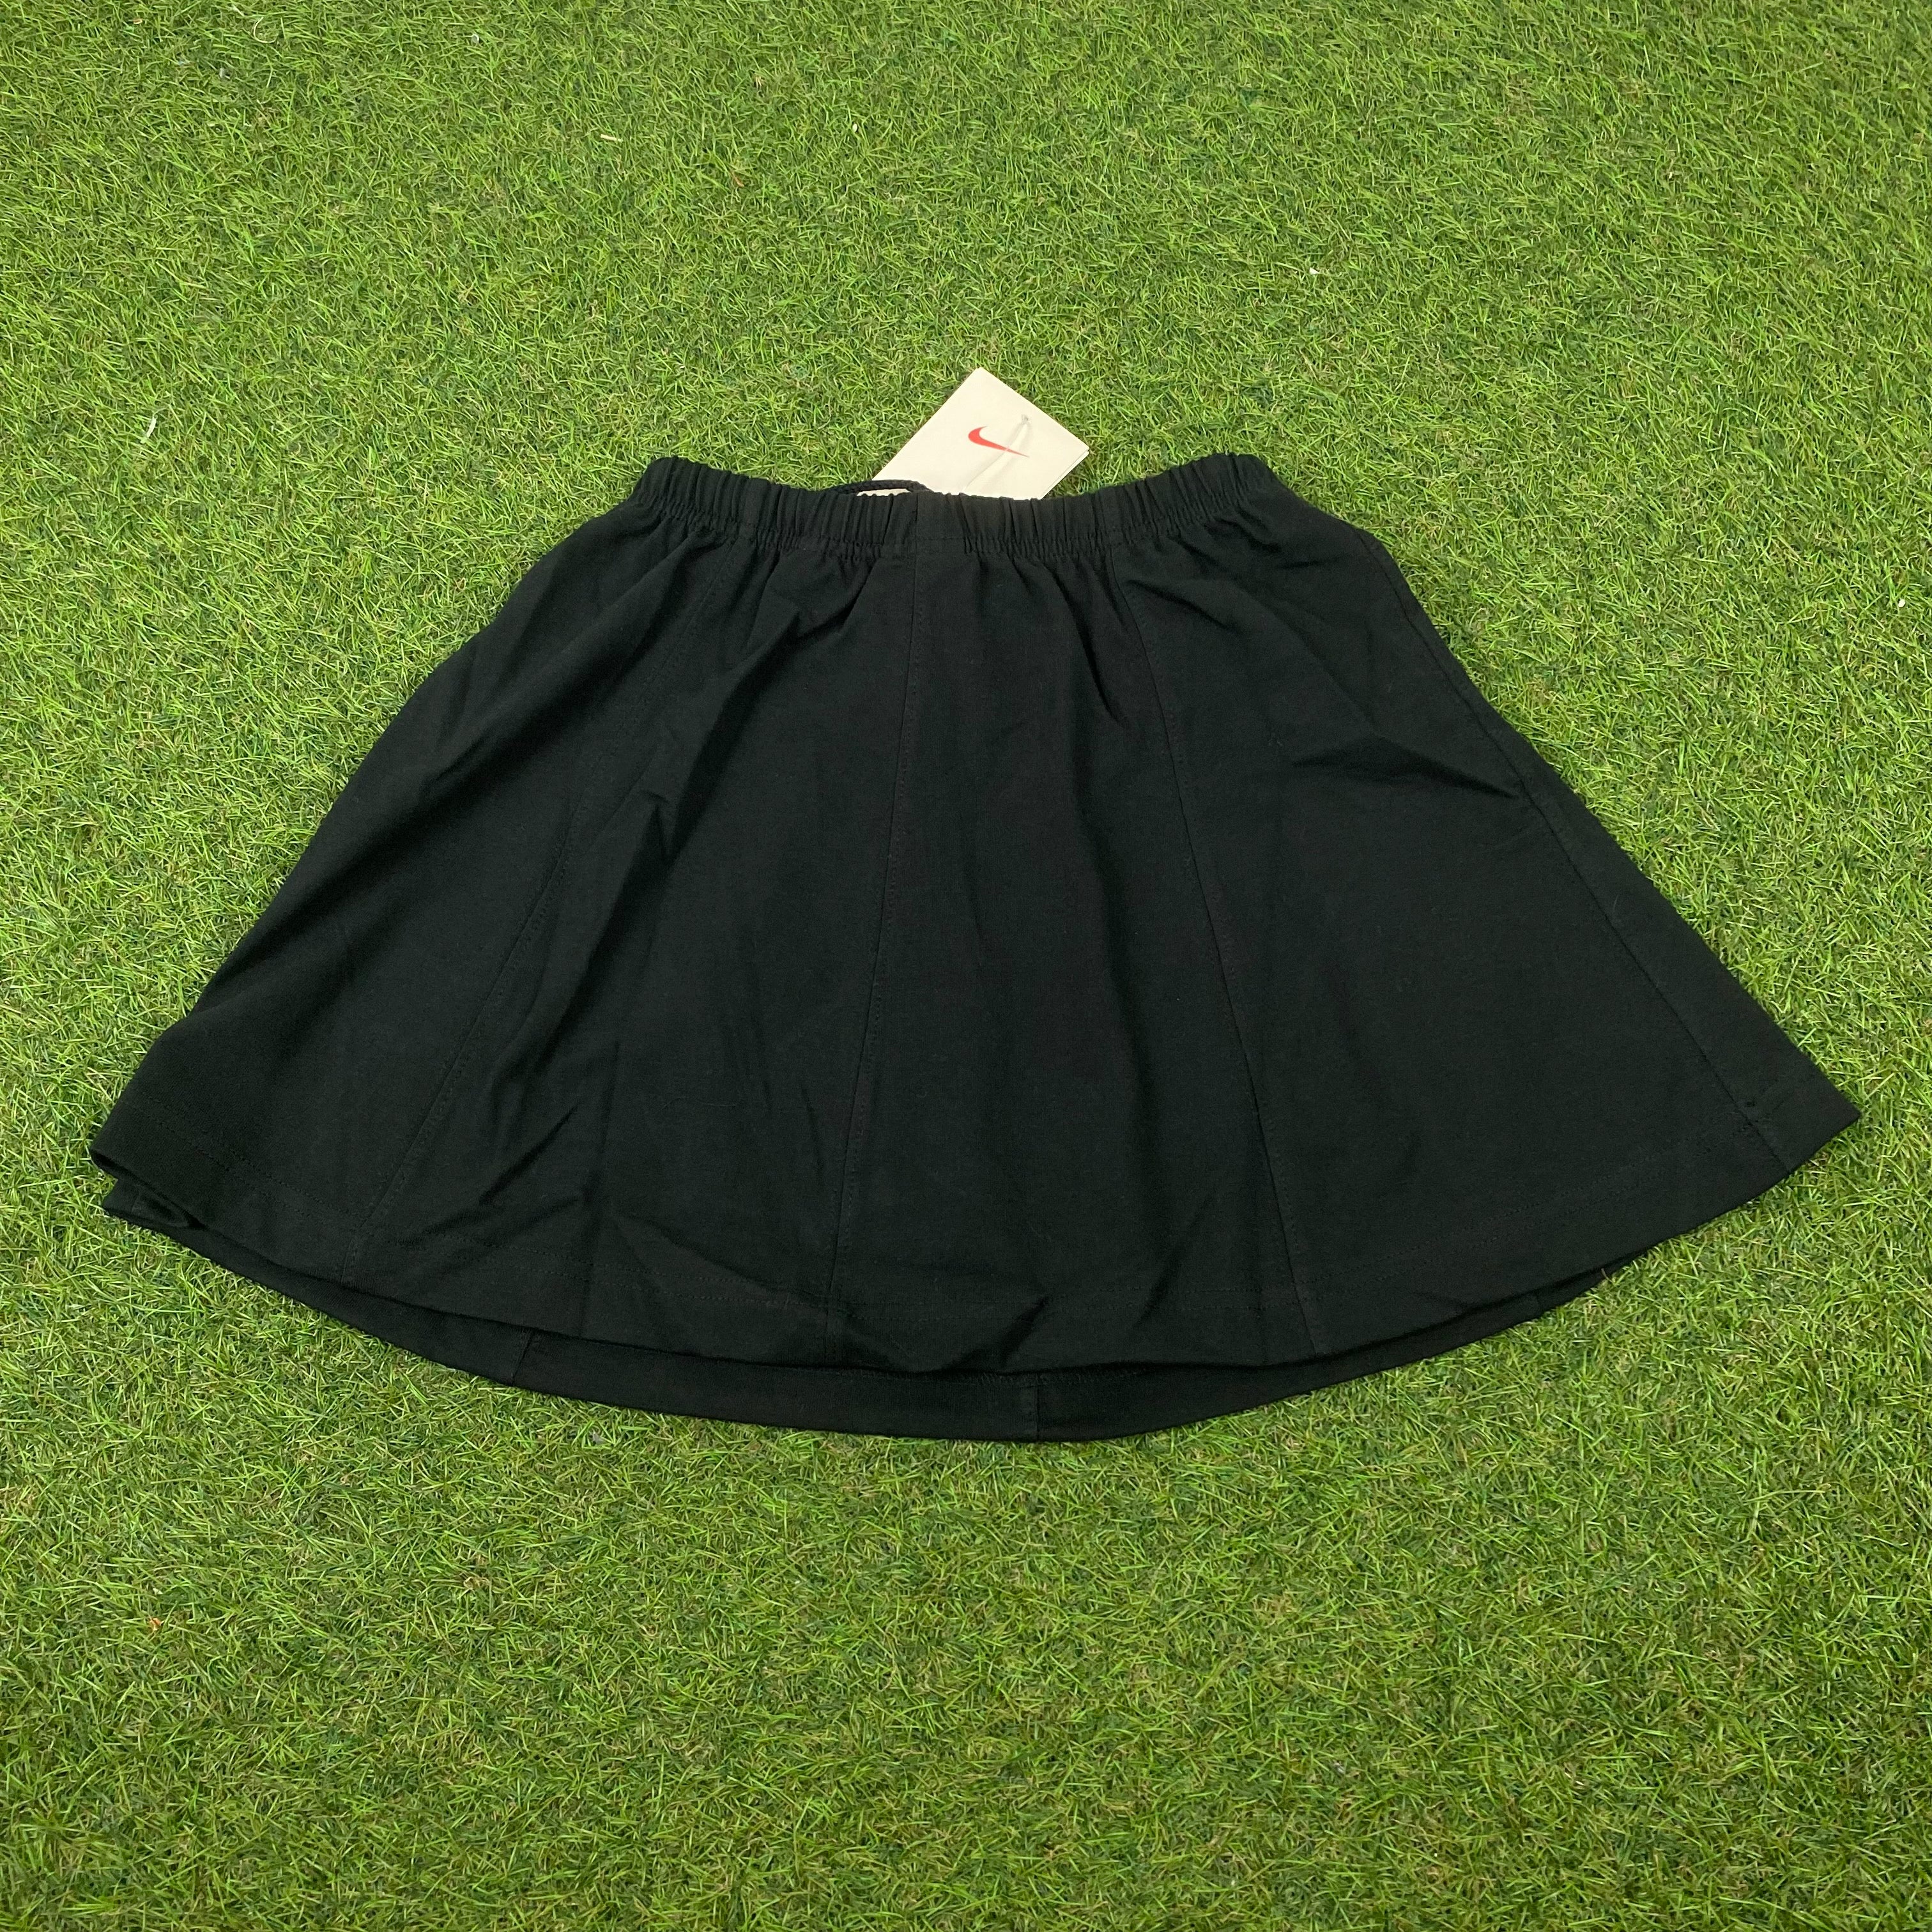 Vintage Nike Challenge Court Skirt Black Small